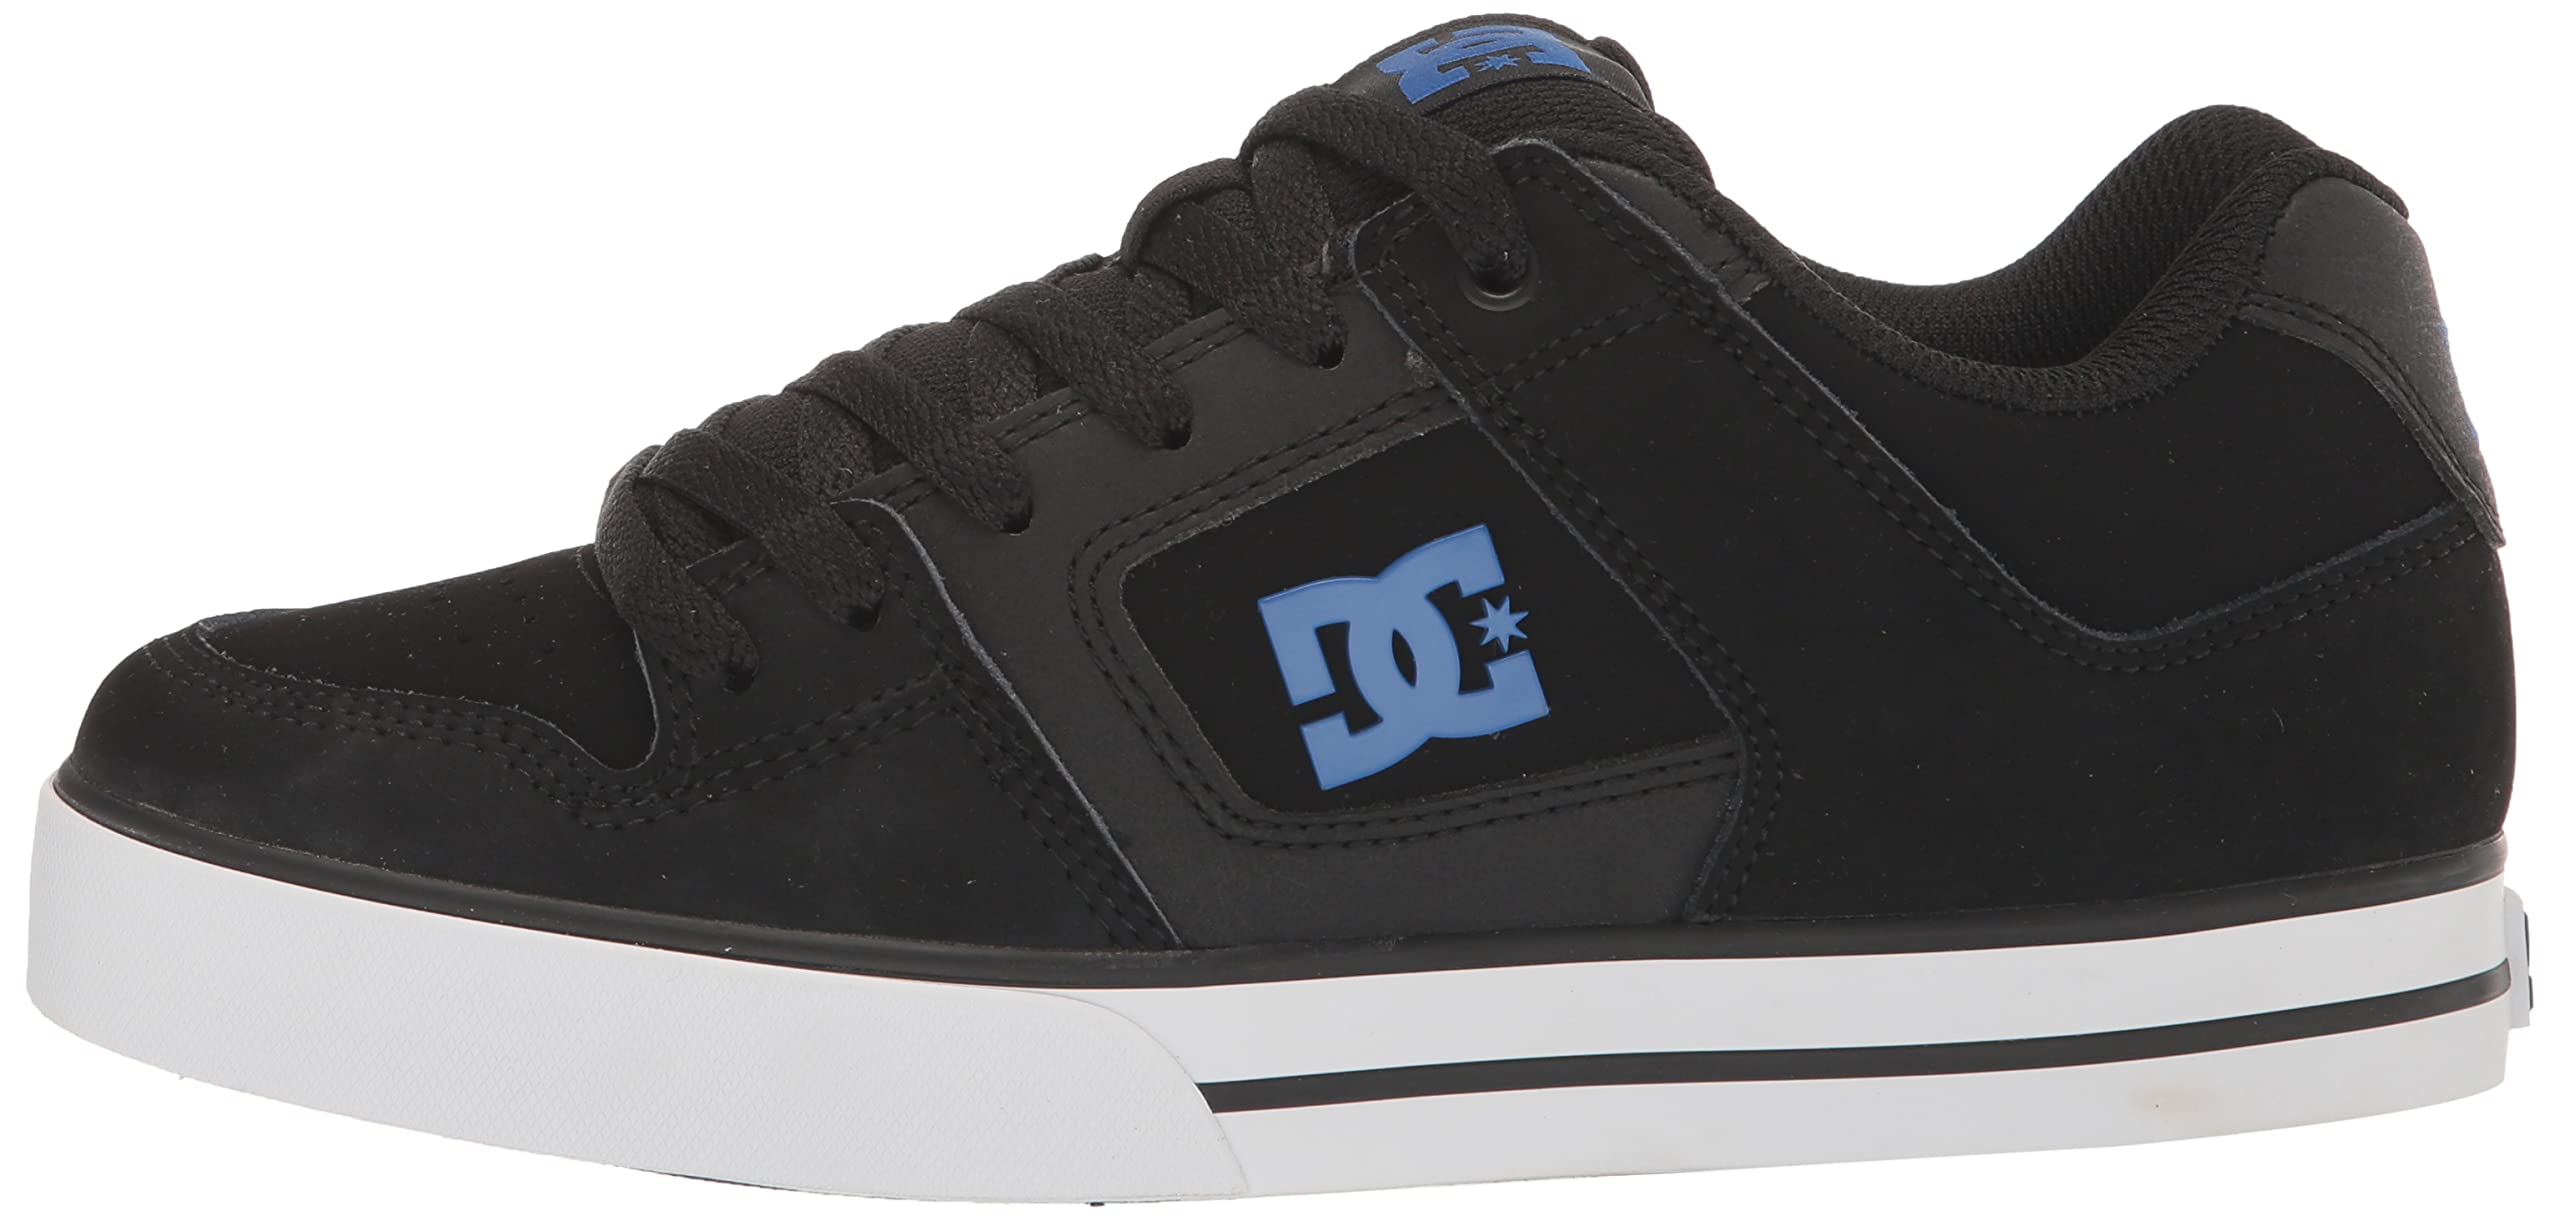 DC Men's Pure Low Top Casual Skate Shoe